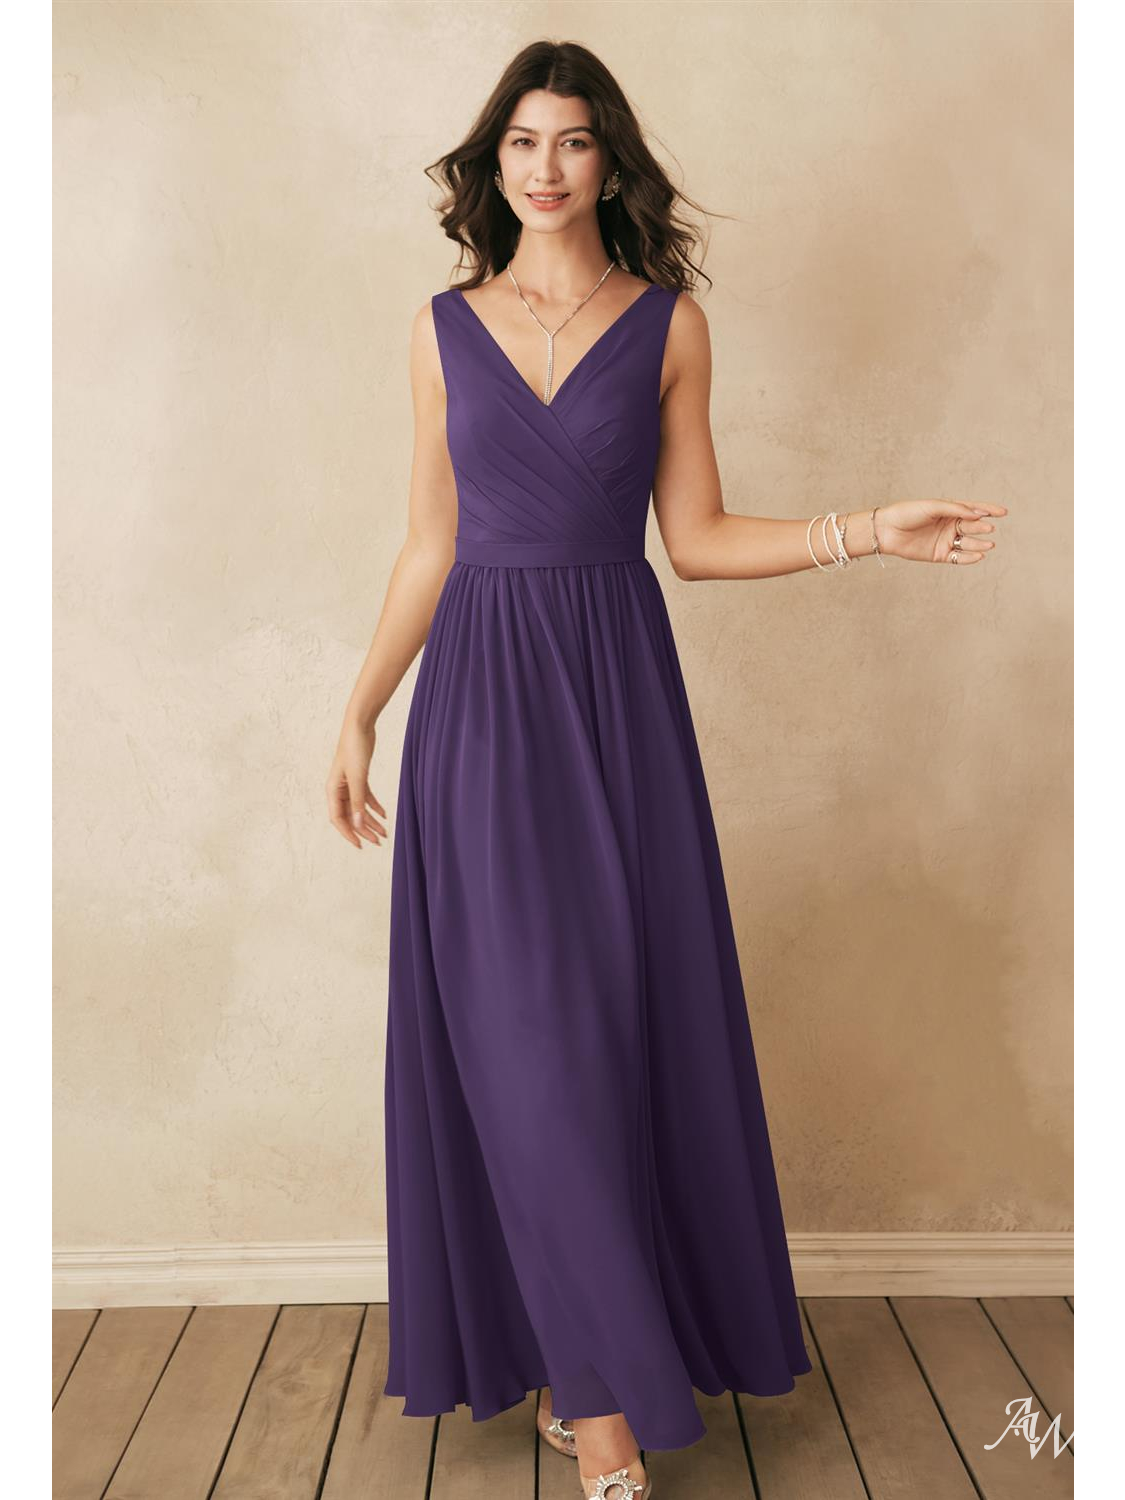 AW Gwyneth Dress, Regency Plus Size Dresses, 99.99 - A.W. Bridal